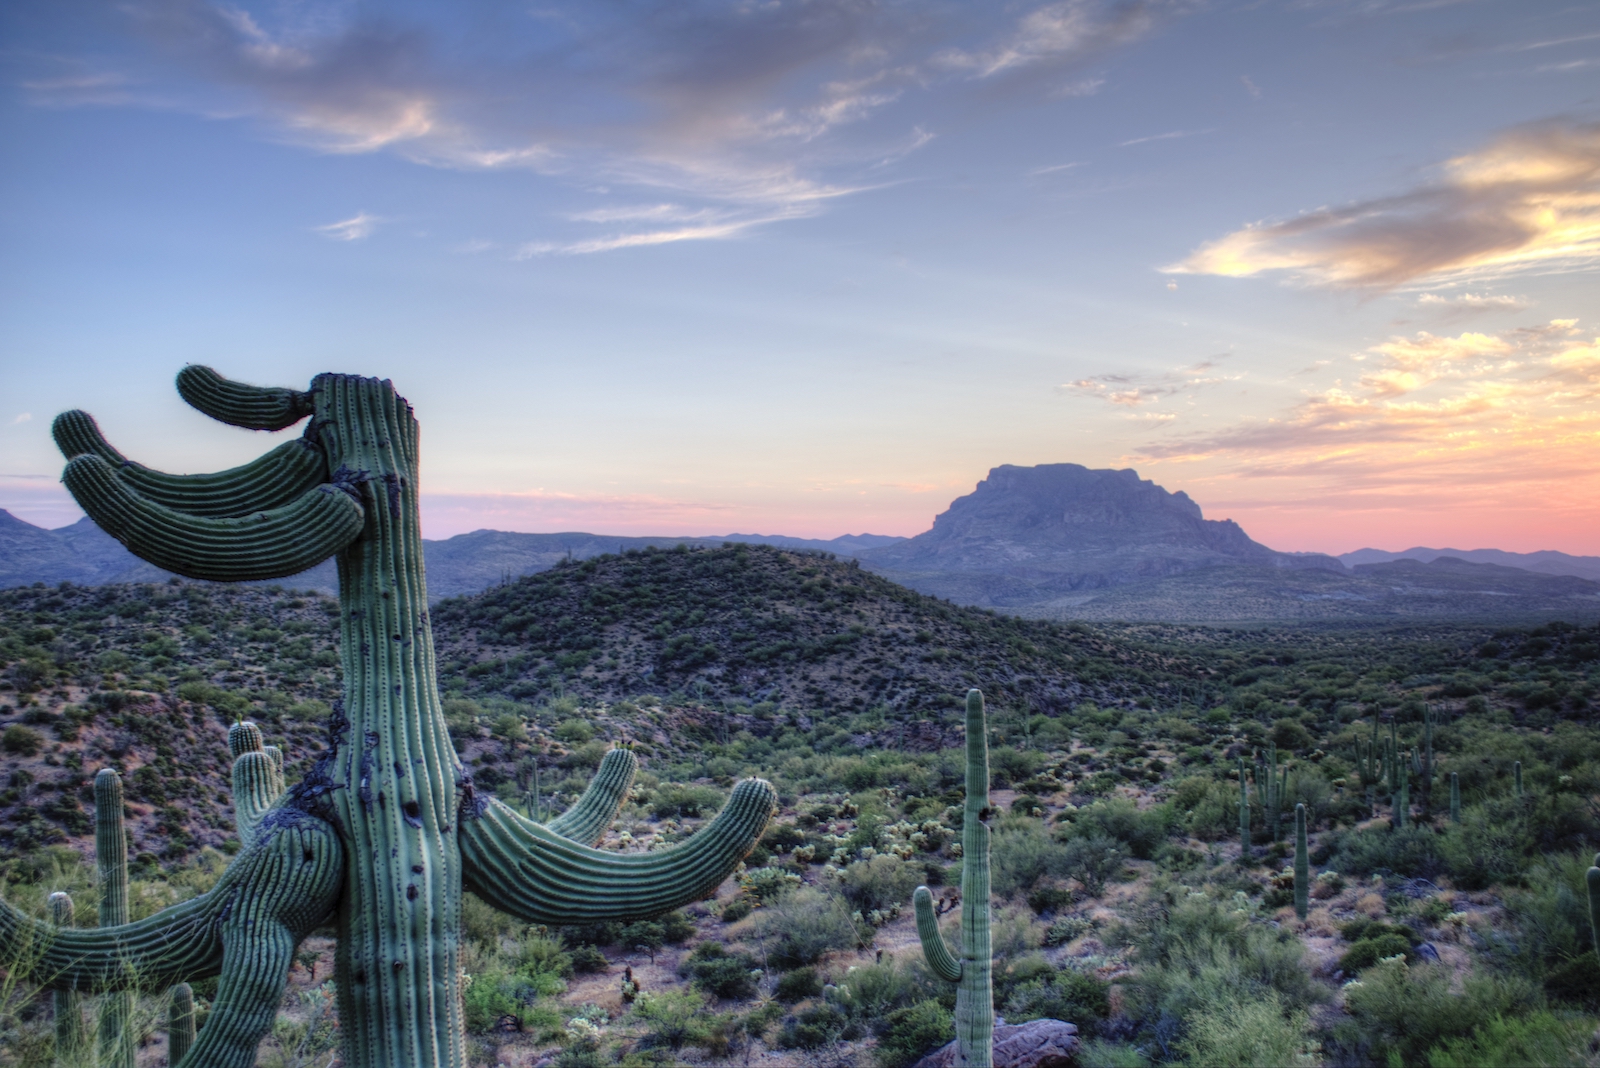 Sunset with mountain and saguaro cactus in Superior, Arizona